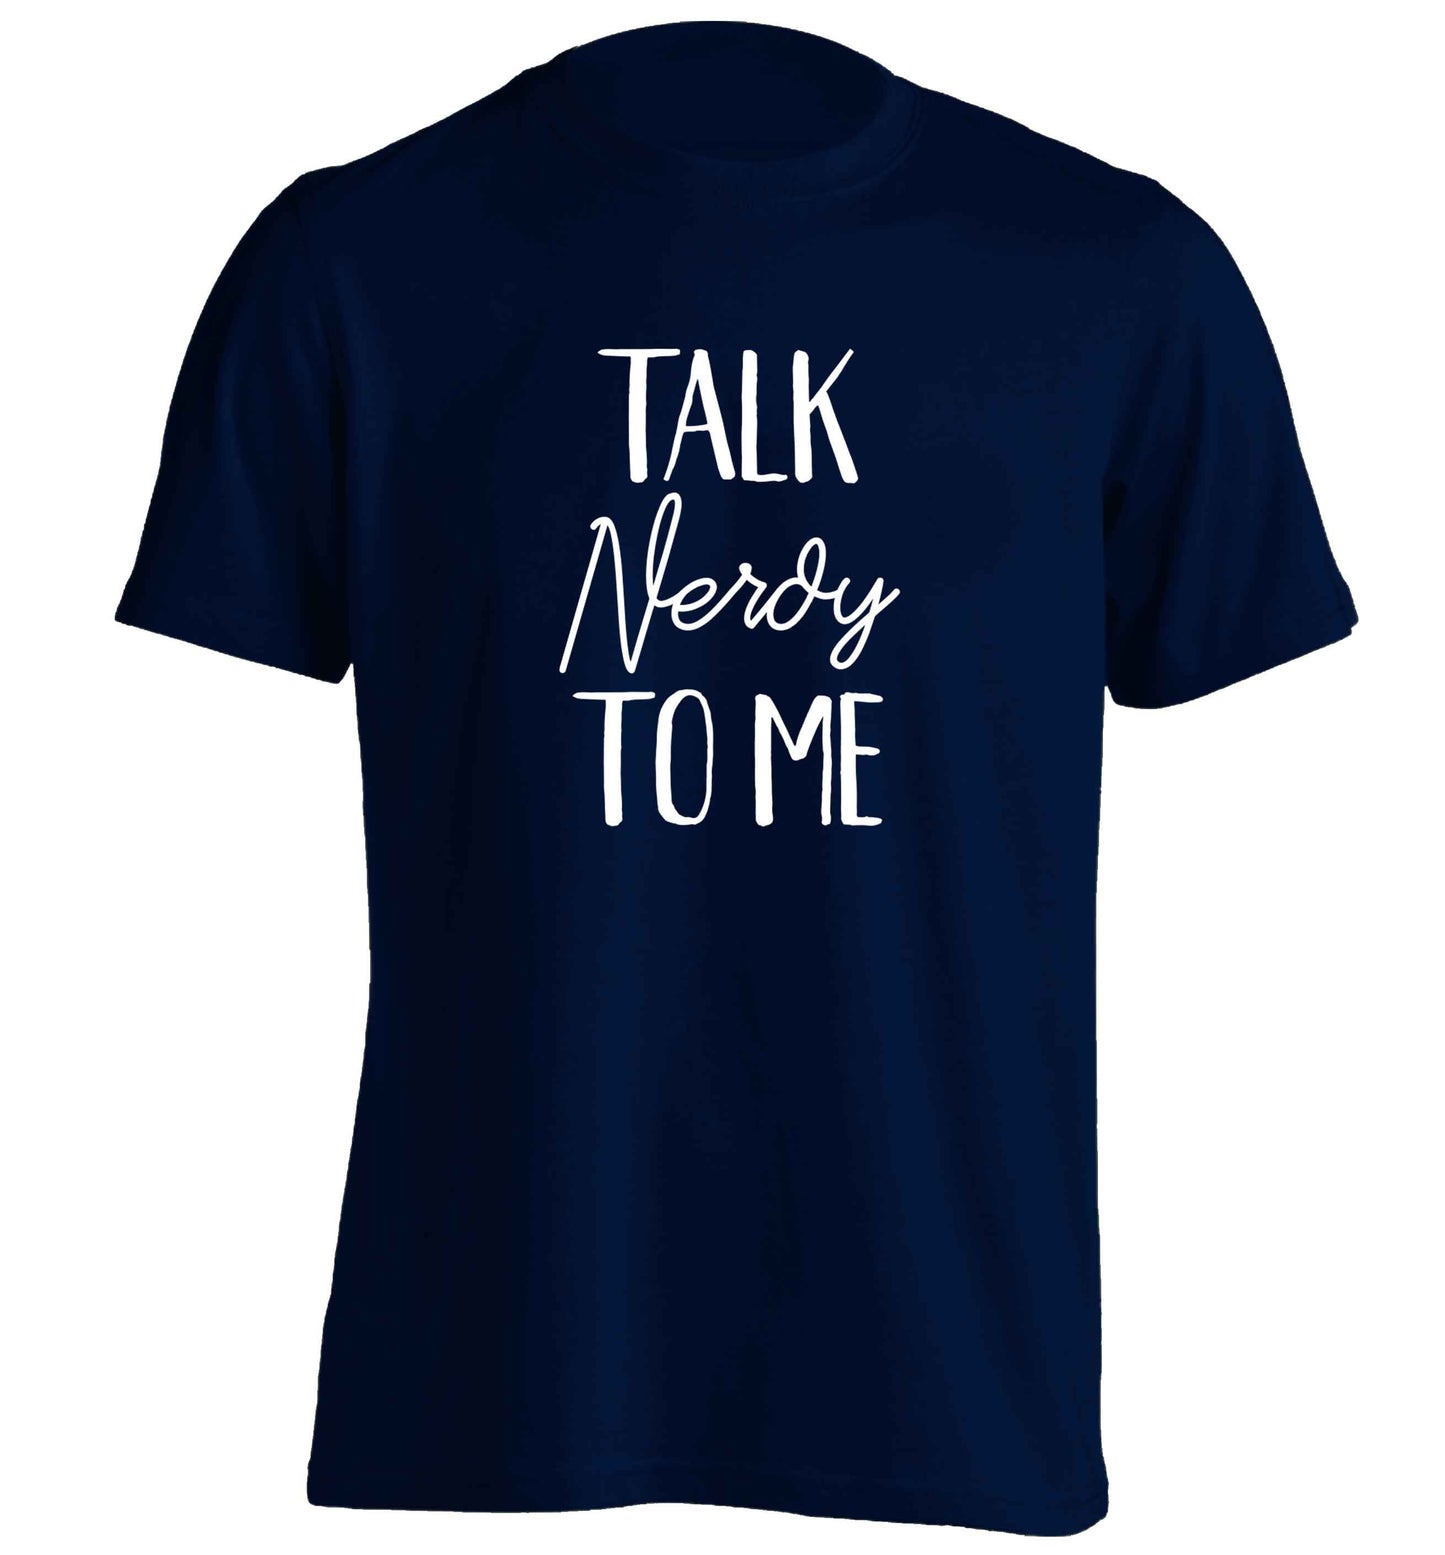 Talk nerdy to me adults unisex navy Tshirt 2XL